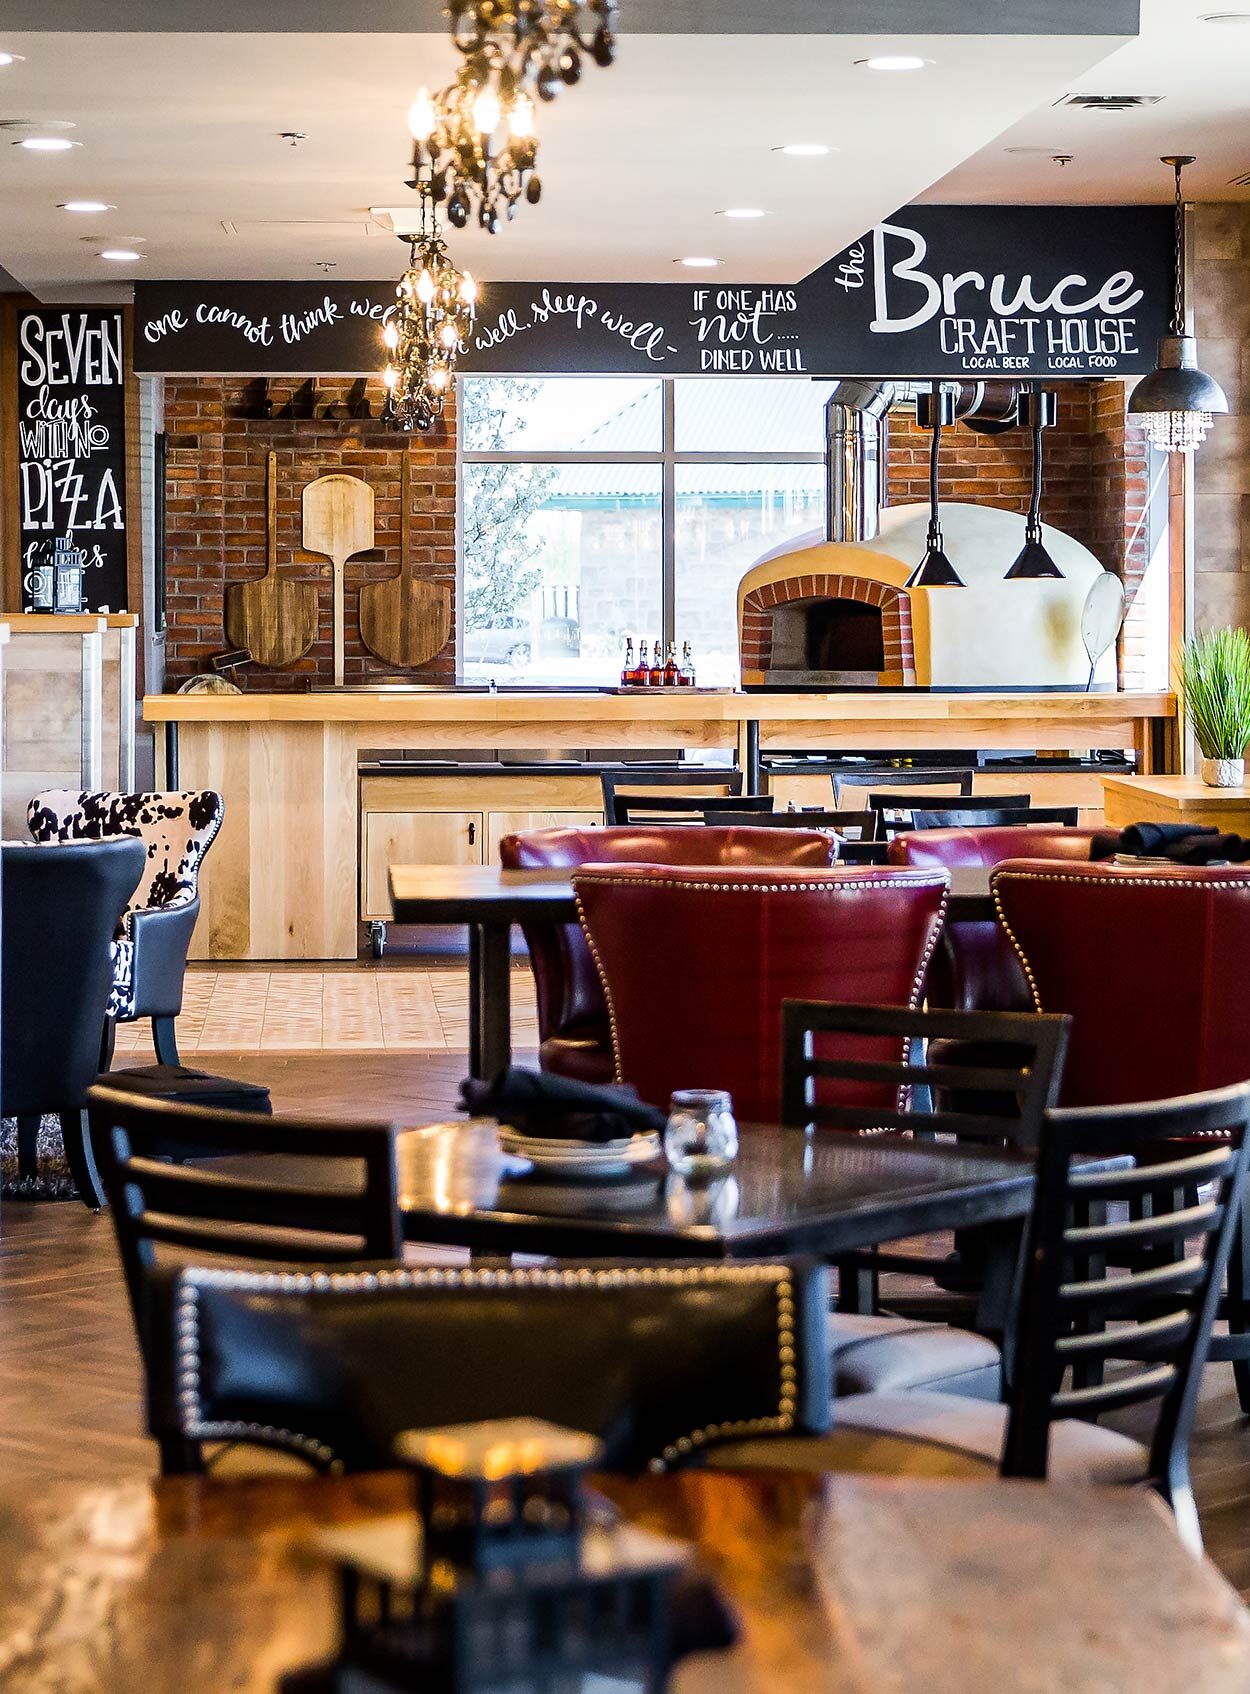 Inside Bruce Craft House Restaurant